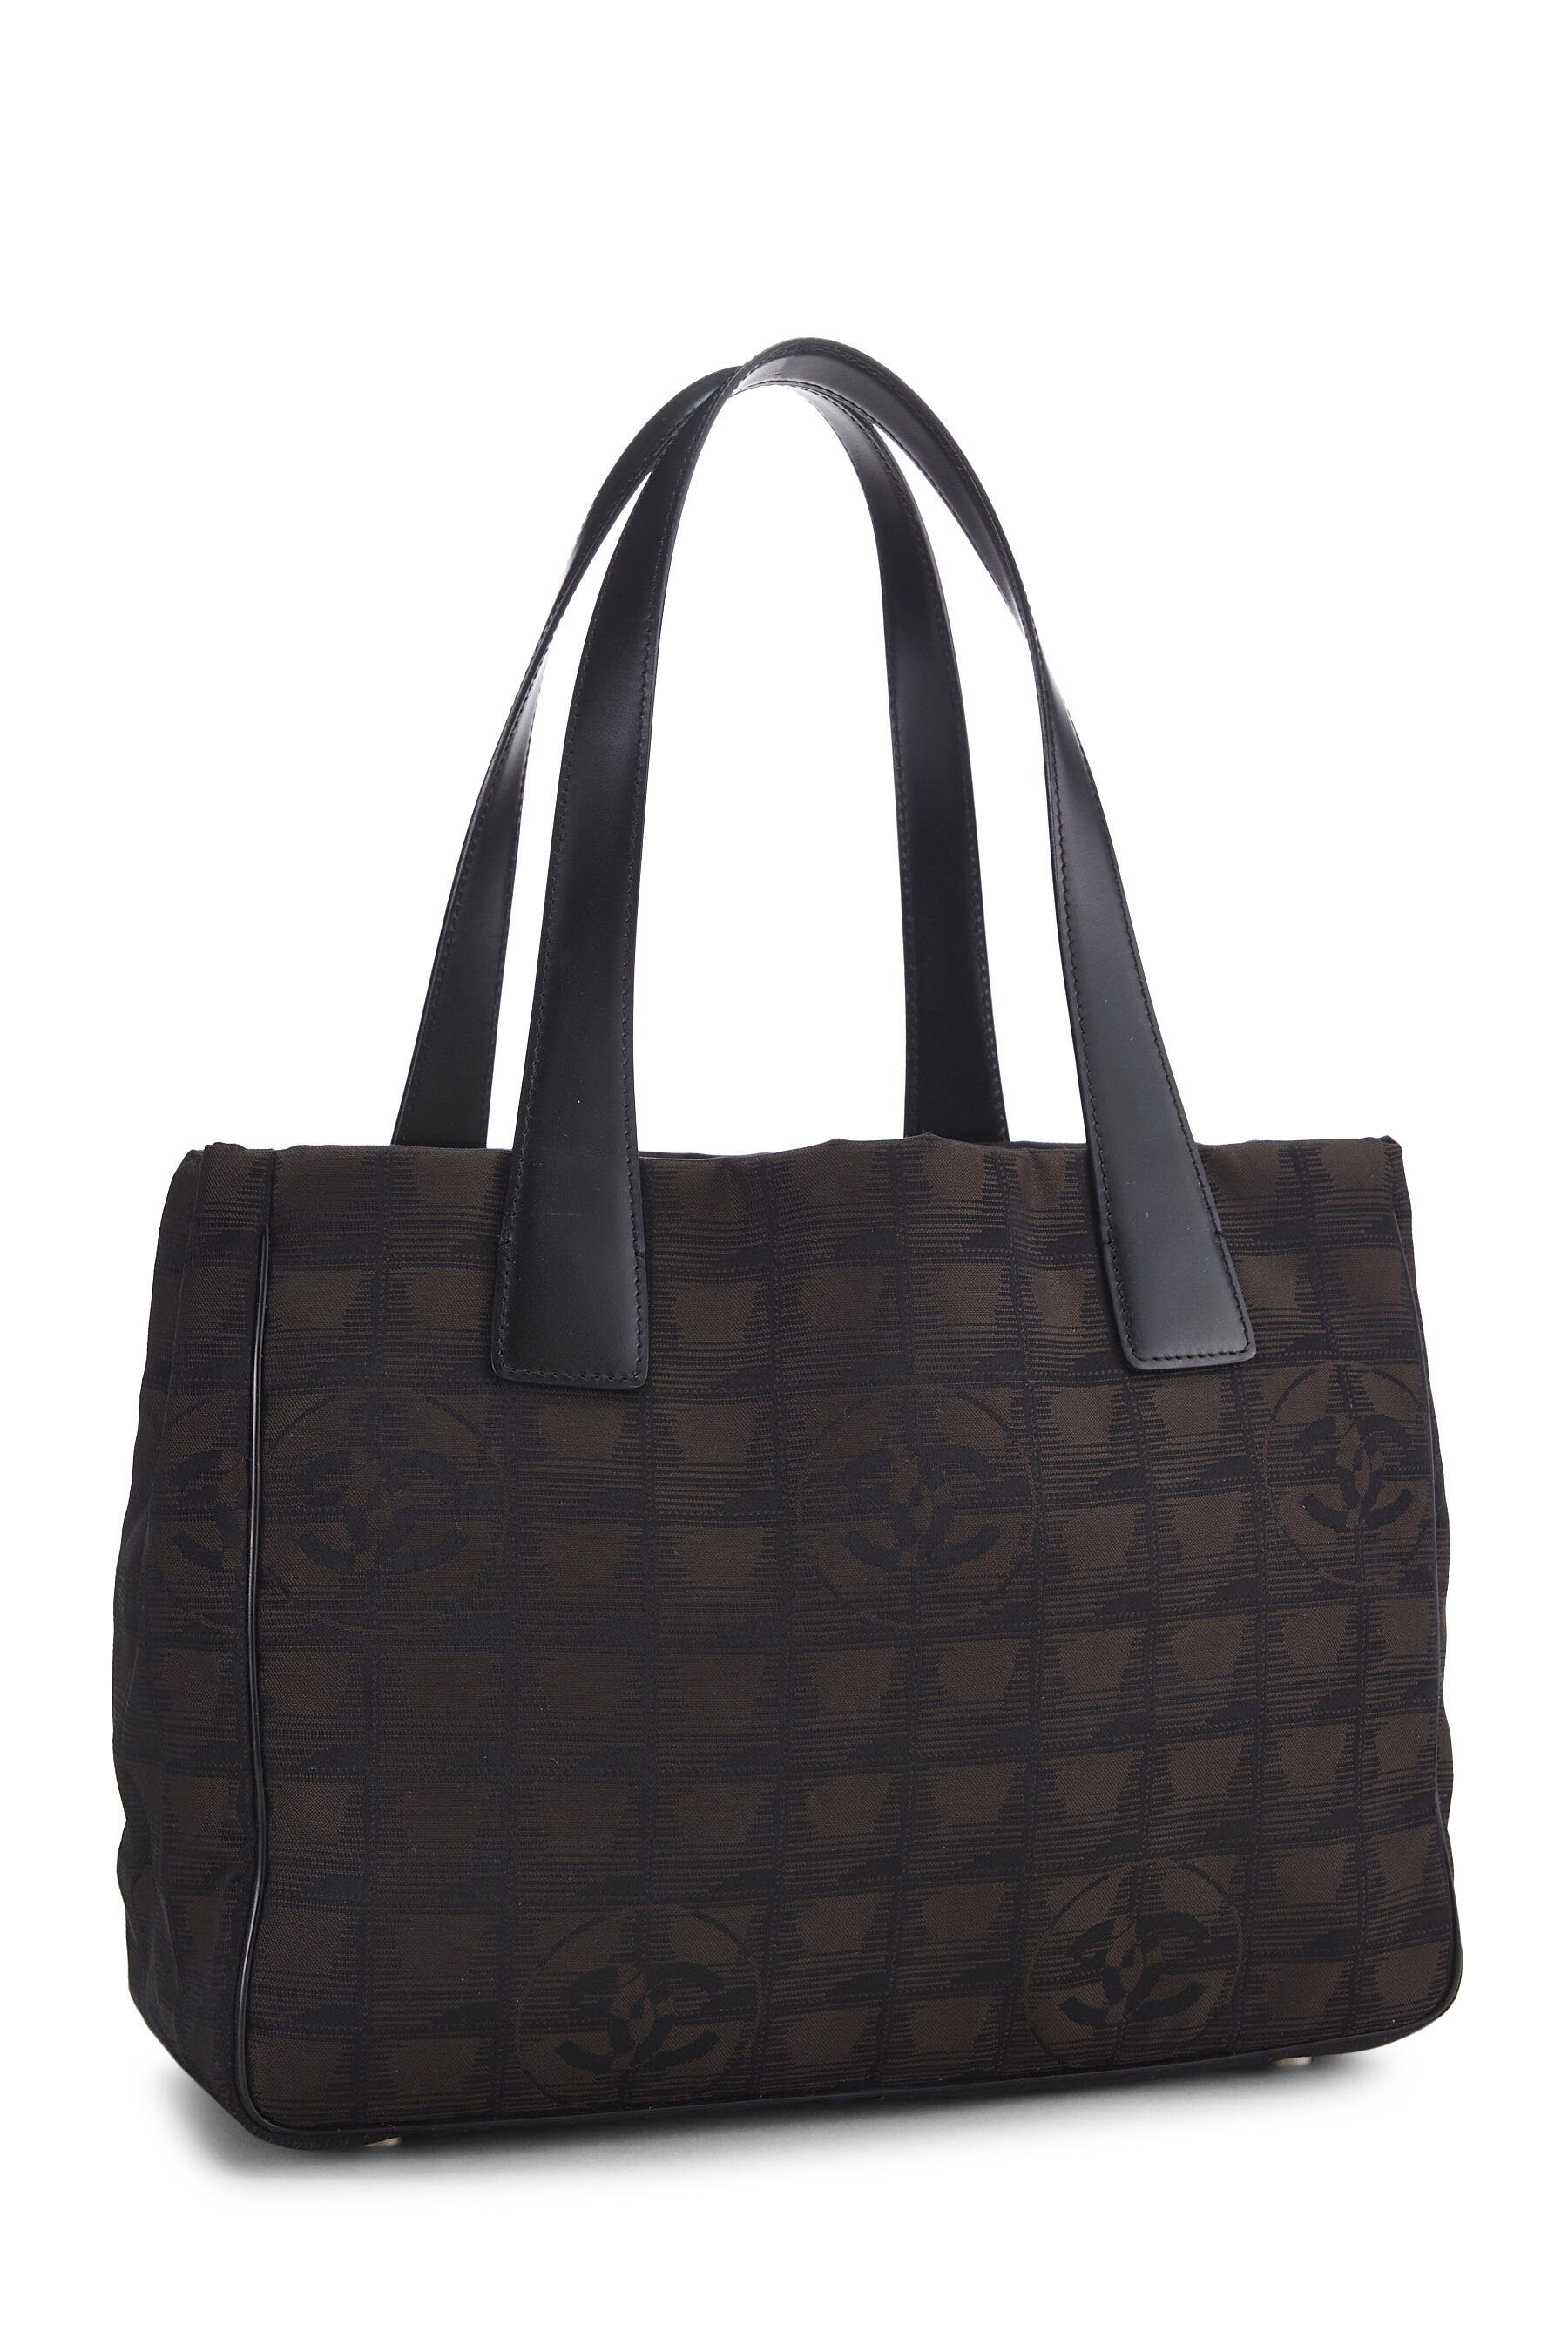 Chanel - Black & Brown Nylon Travel Line Shoulder Bag Small